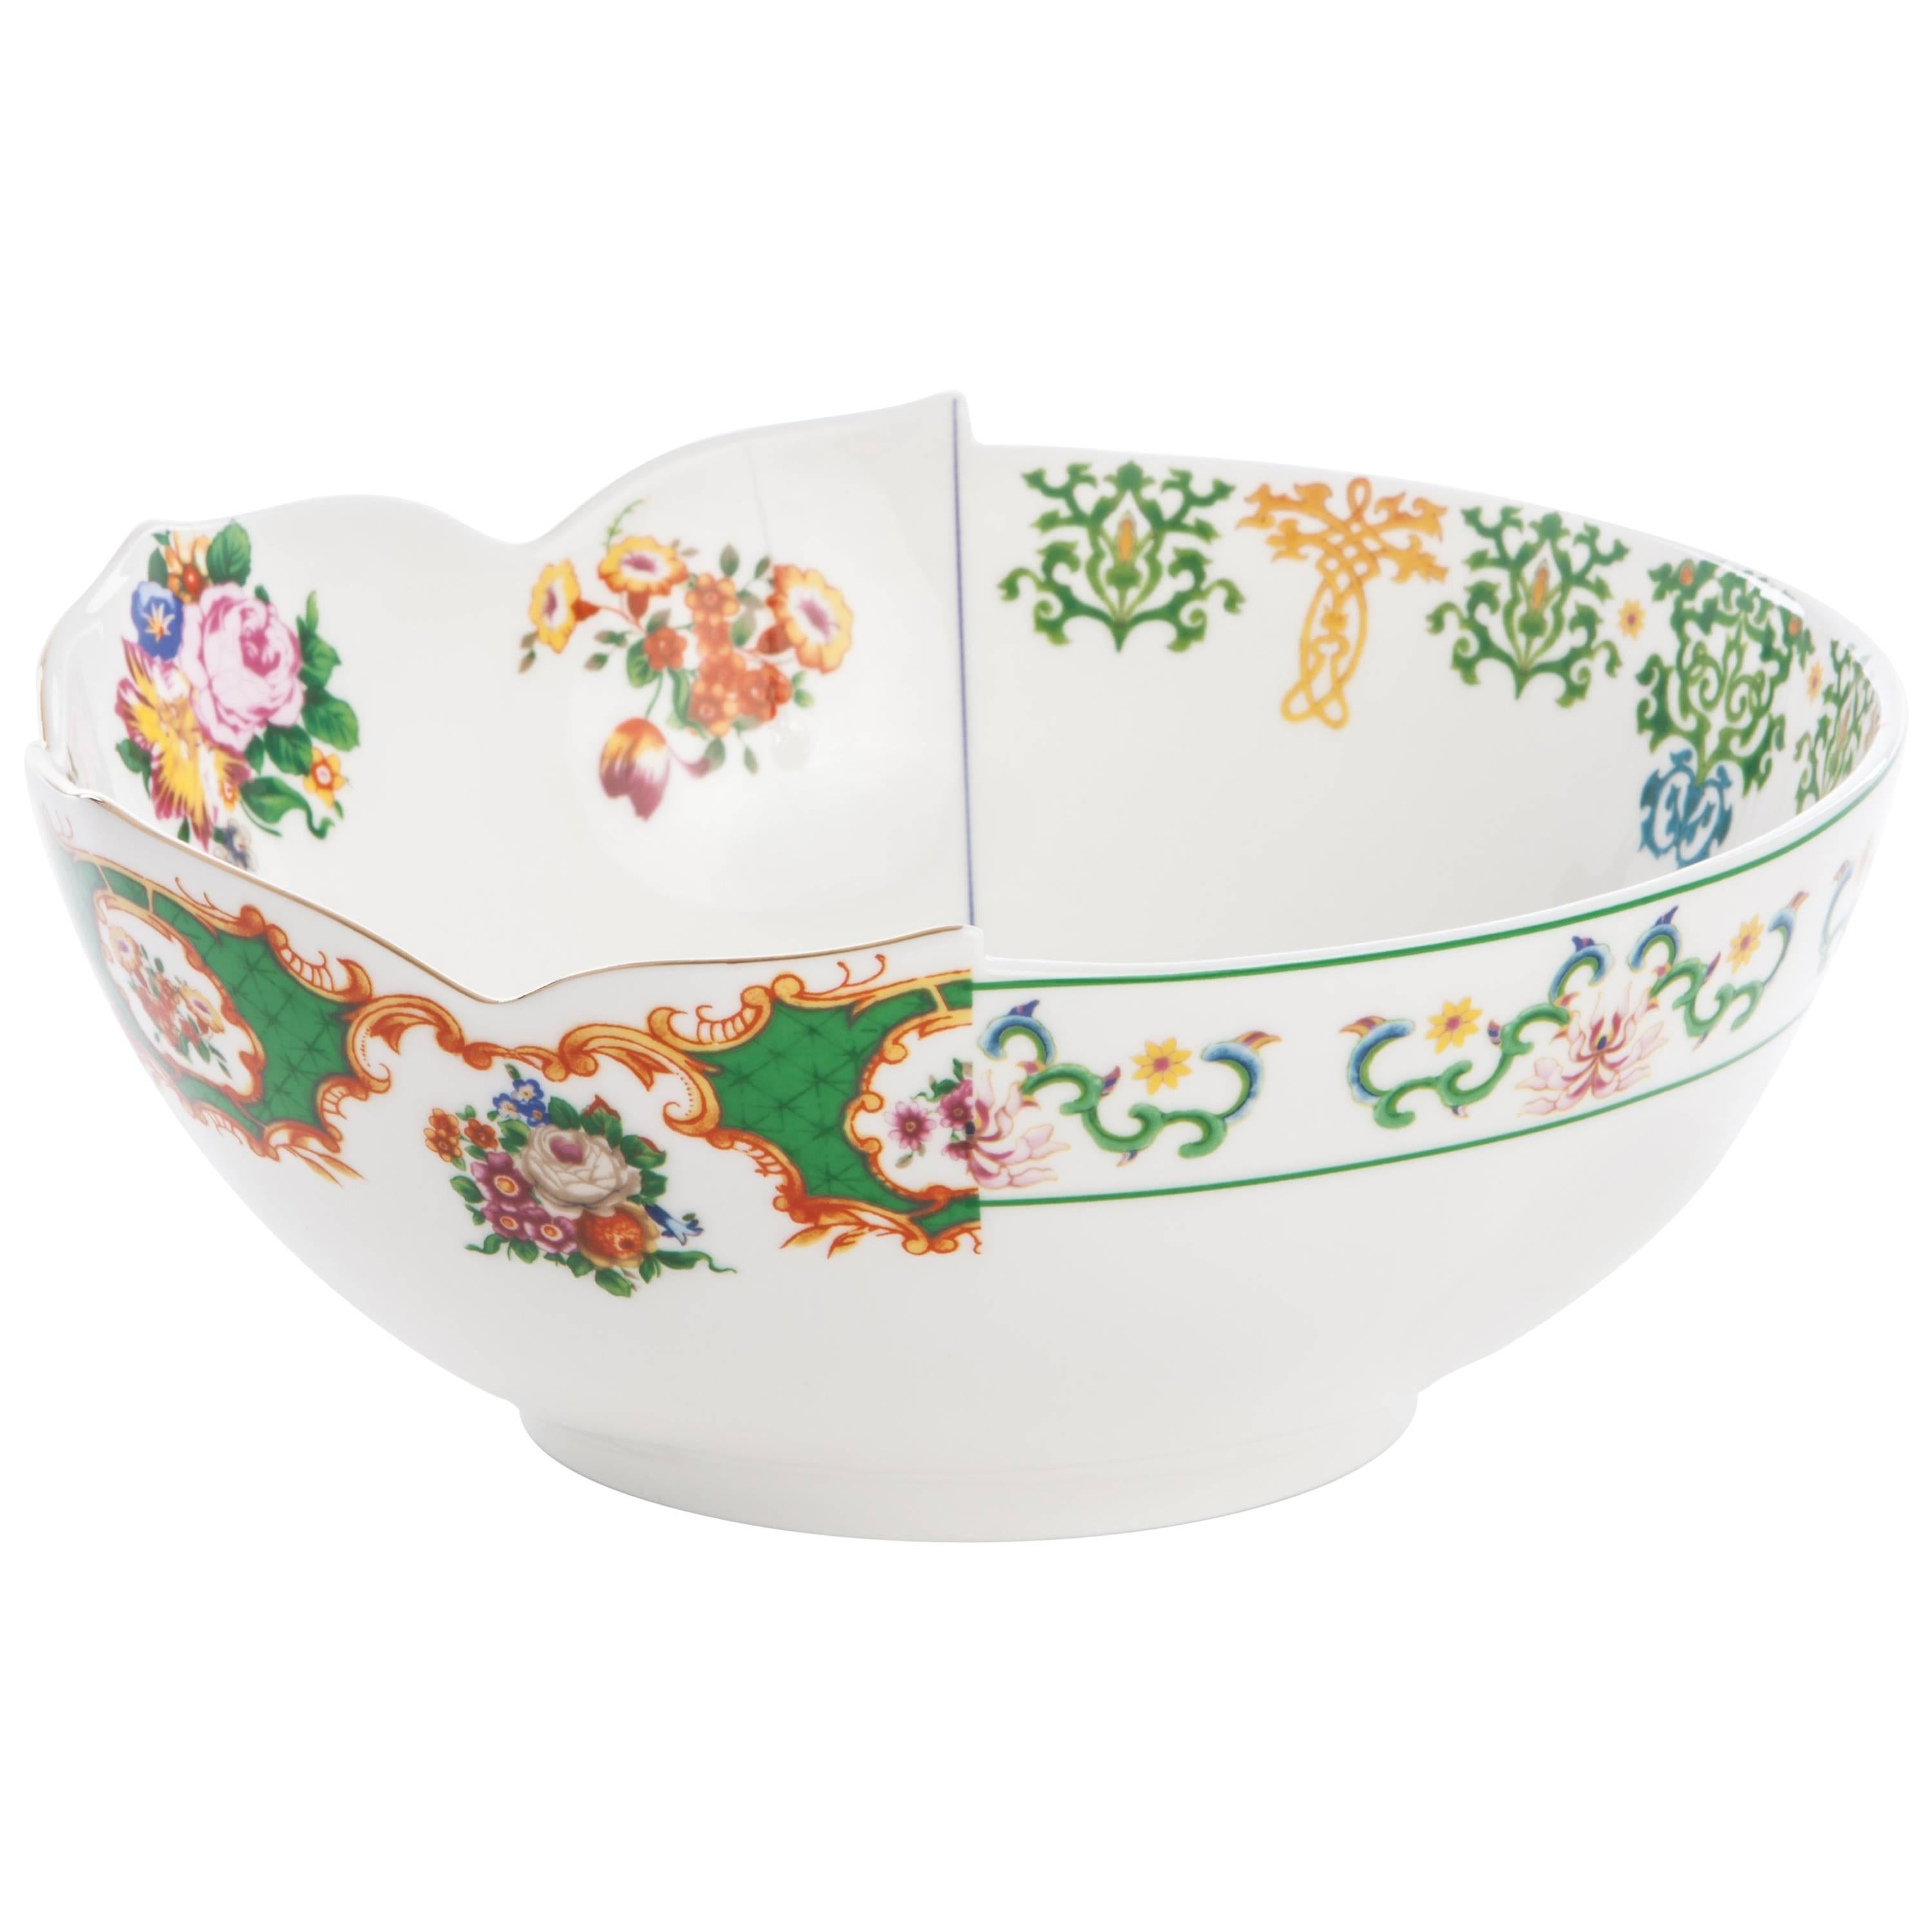 Seletti "Hybrid-Zaira" Salad Bowl in Porcelain For Sale